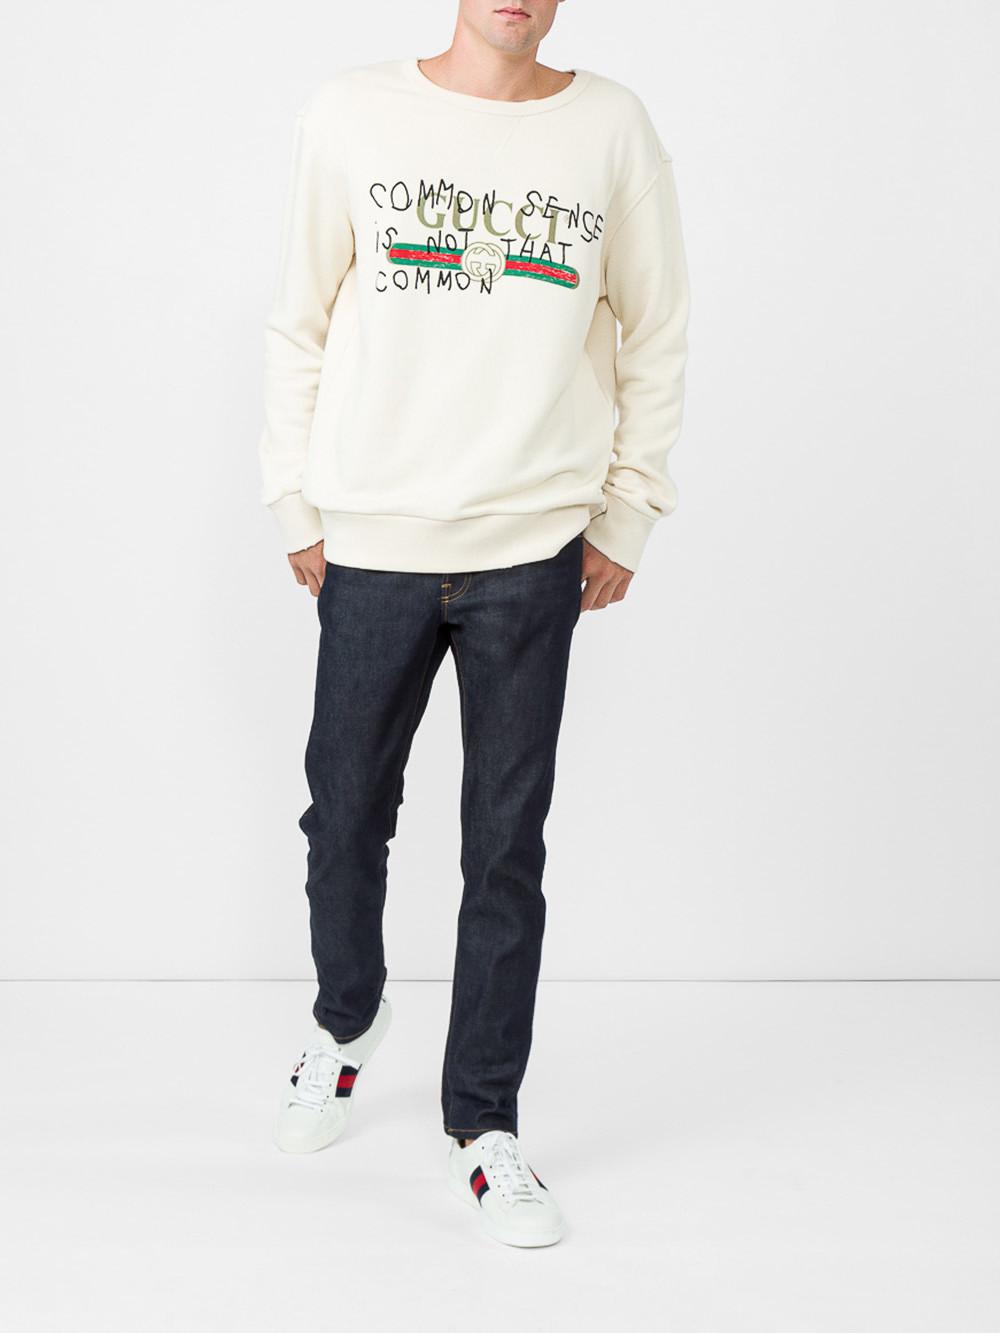 Lyst - Gucci 'common Sense Is Not That Common' Sweatshirt for Men